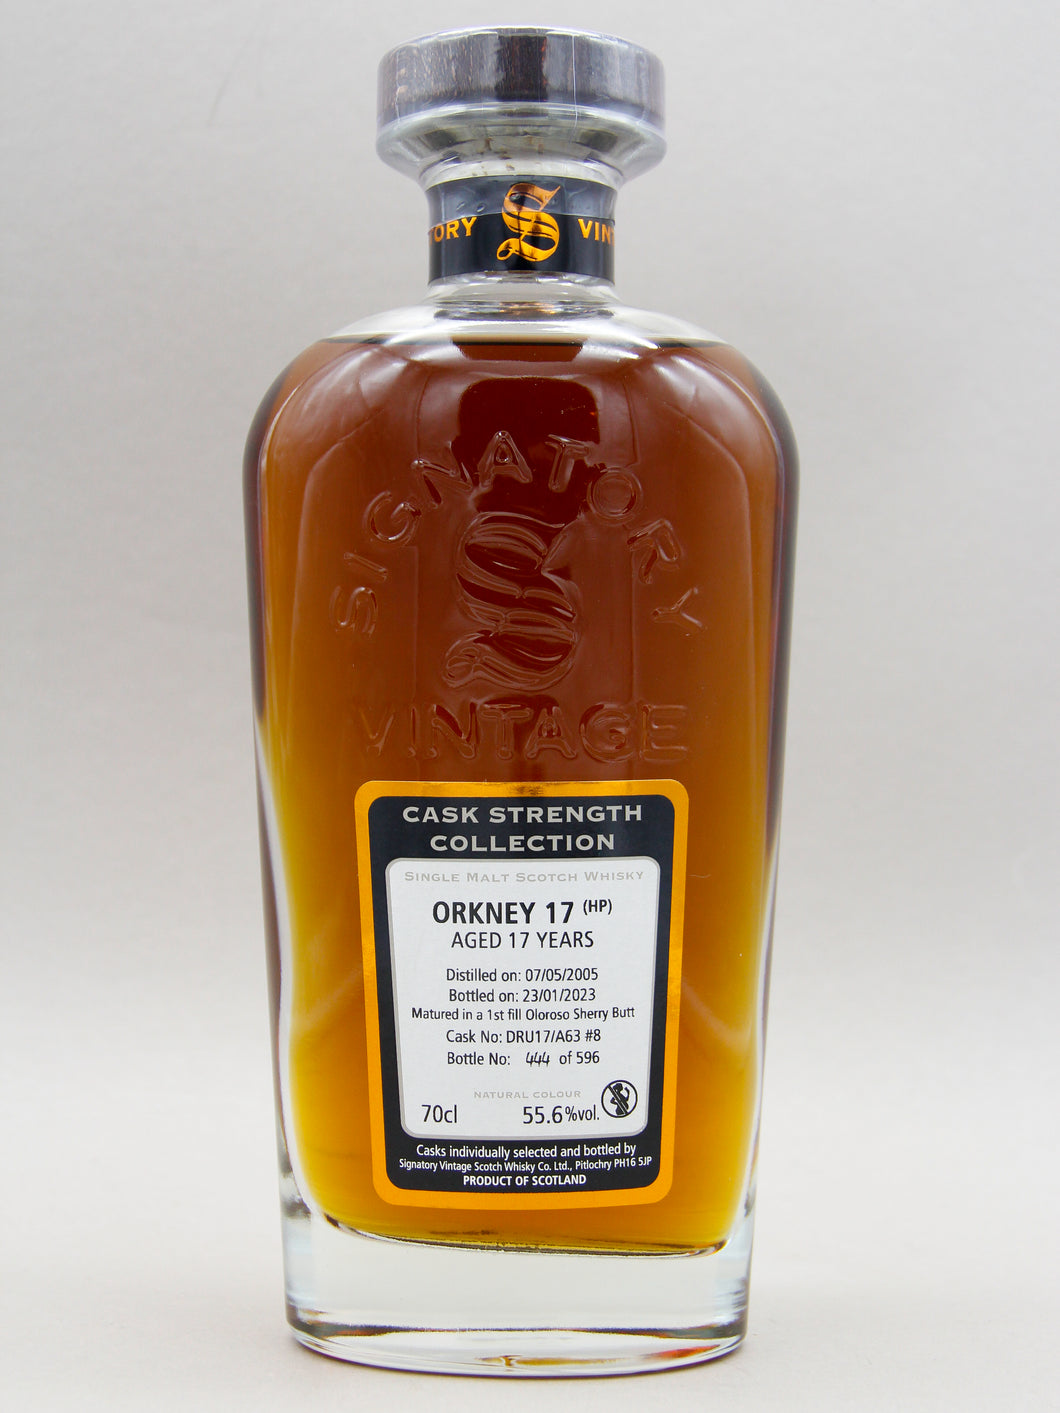 Orkney 17 (HP) 2005-2023, Aged 17 Years, Signatory Vintage, Highland Single Malt Scotch Whisky (55.6%, 70cl)